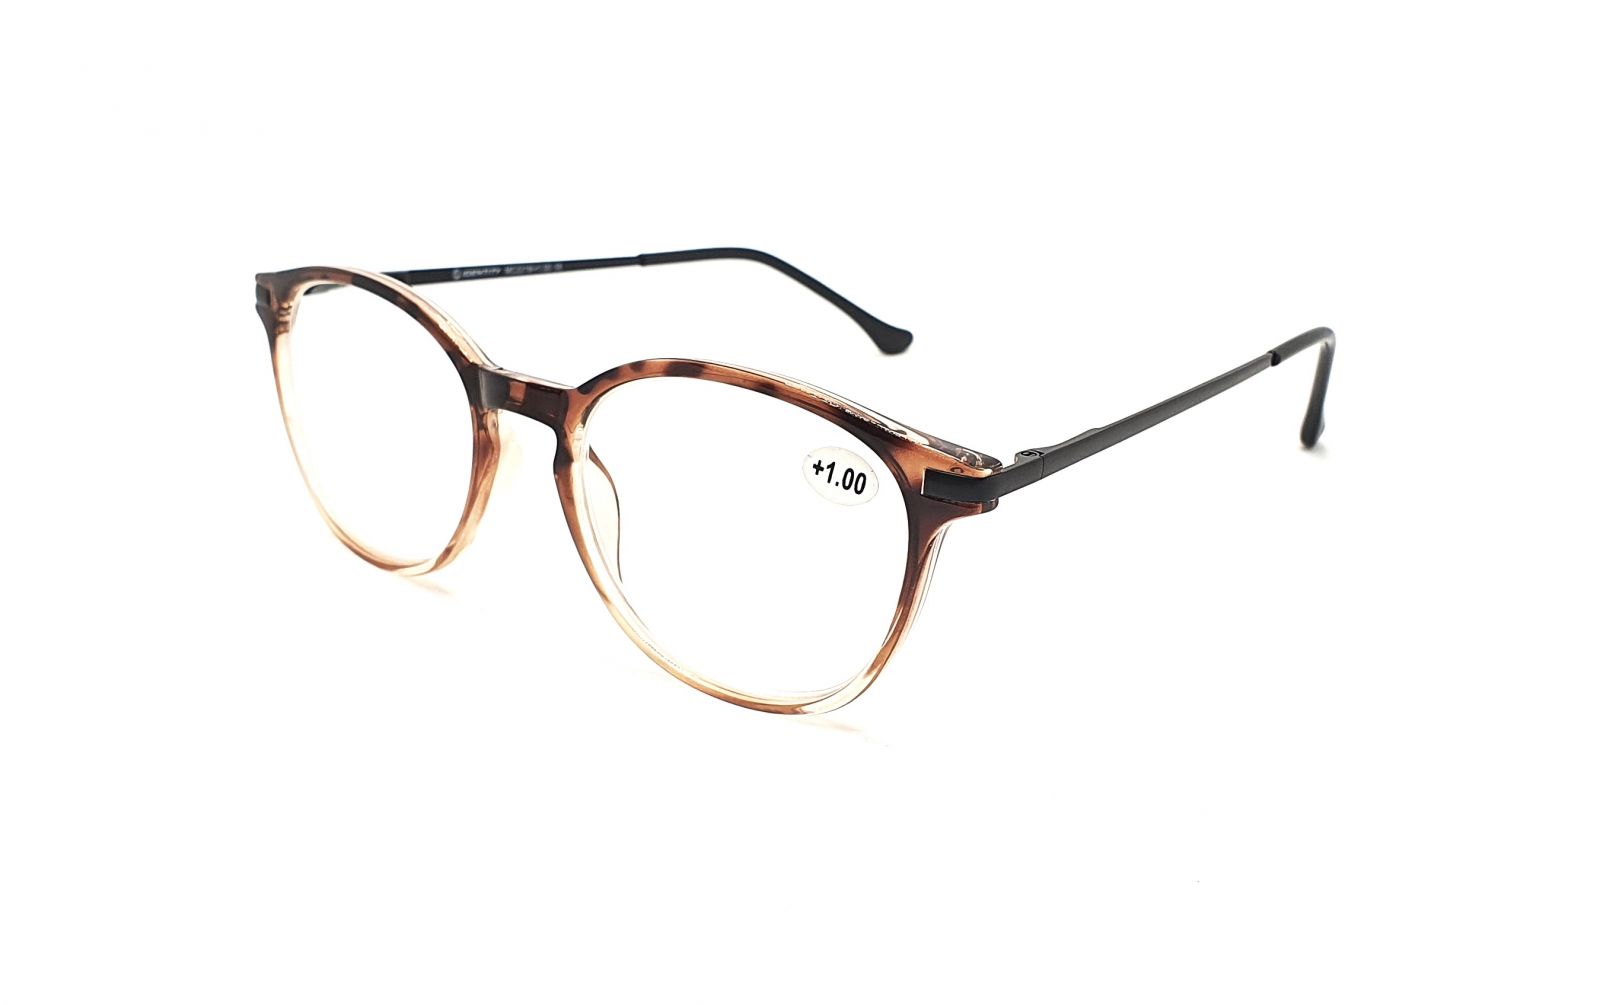 Dioptrické brýle MC2219 +2,50 flex brown